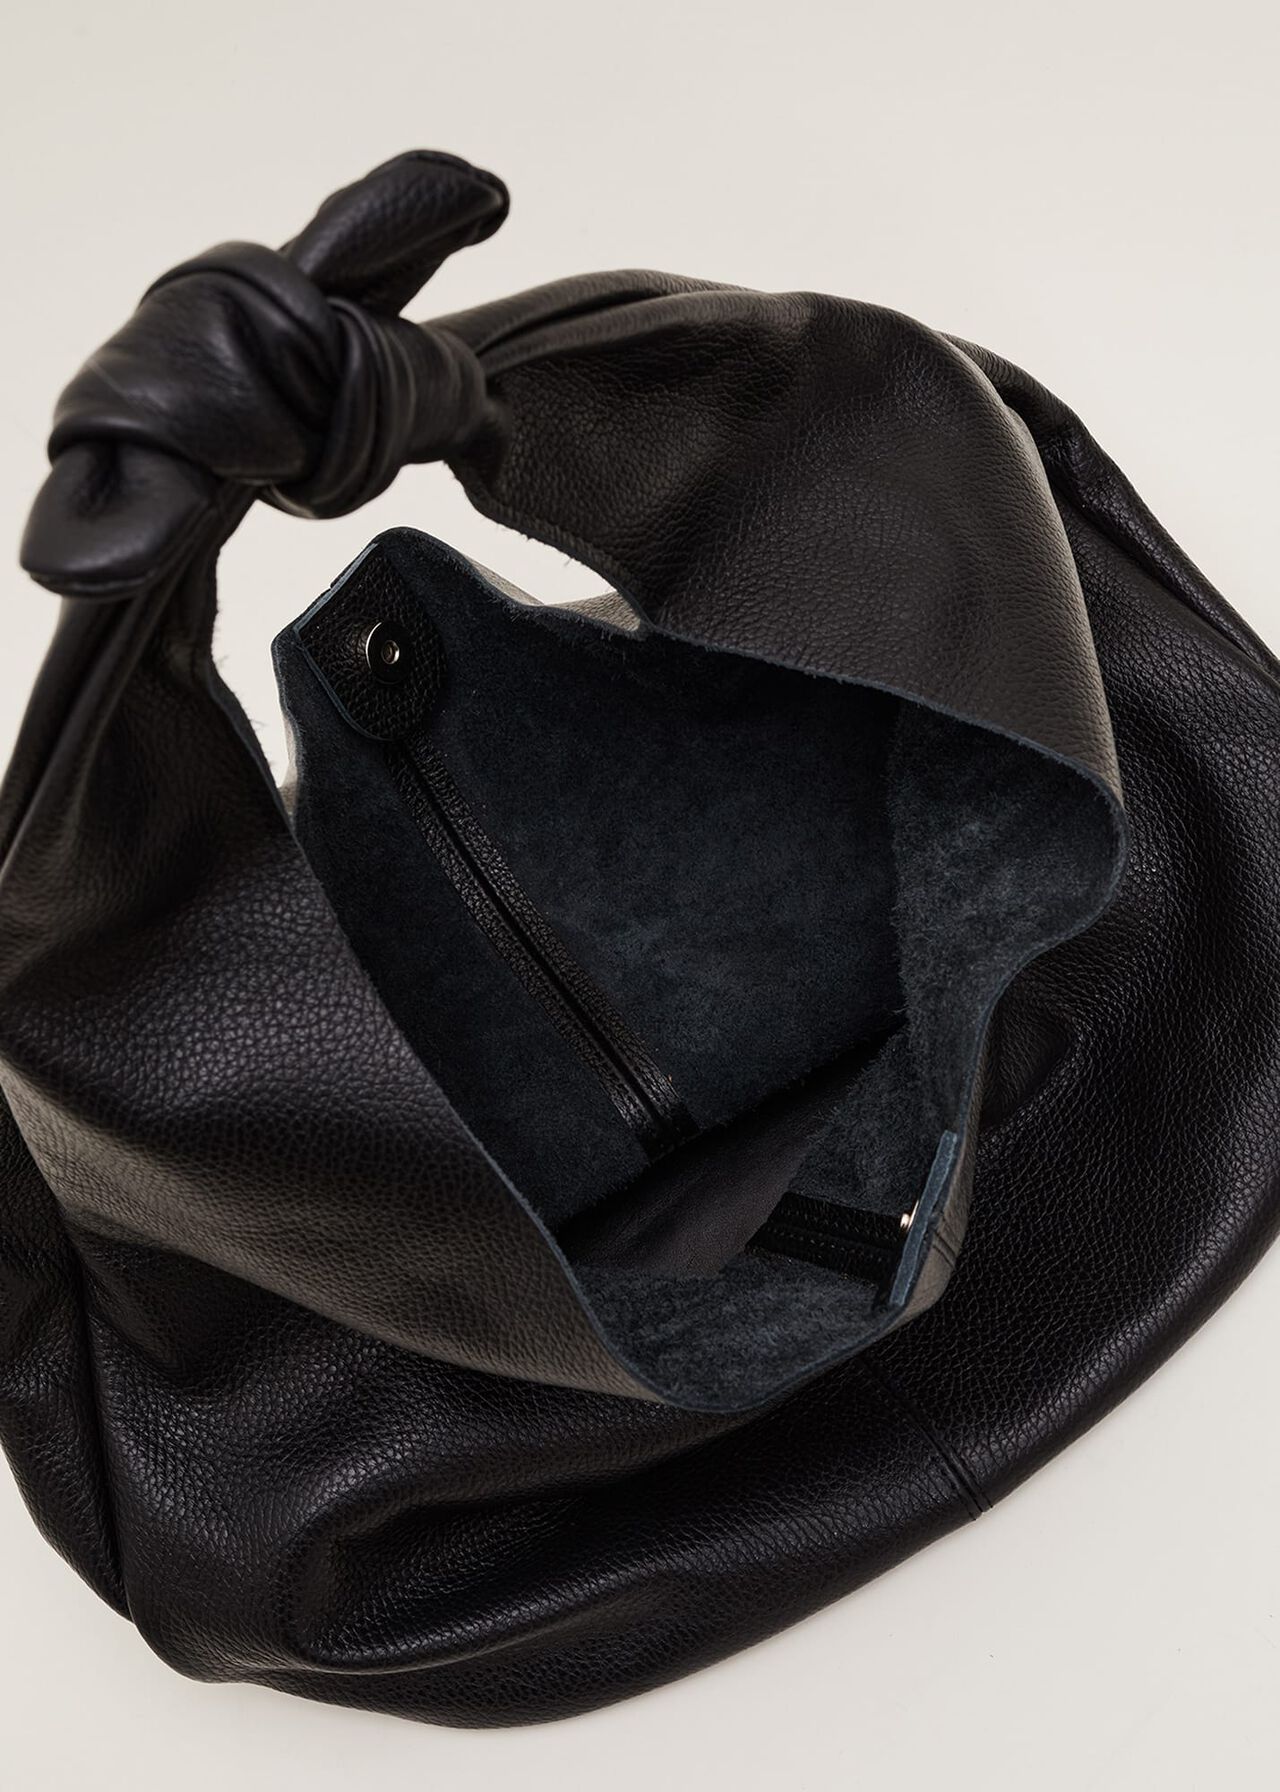 Leather Hobo Slouch Bag